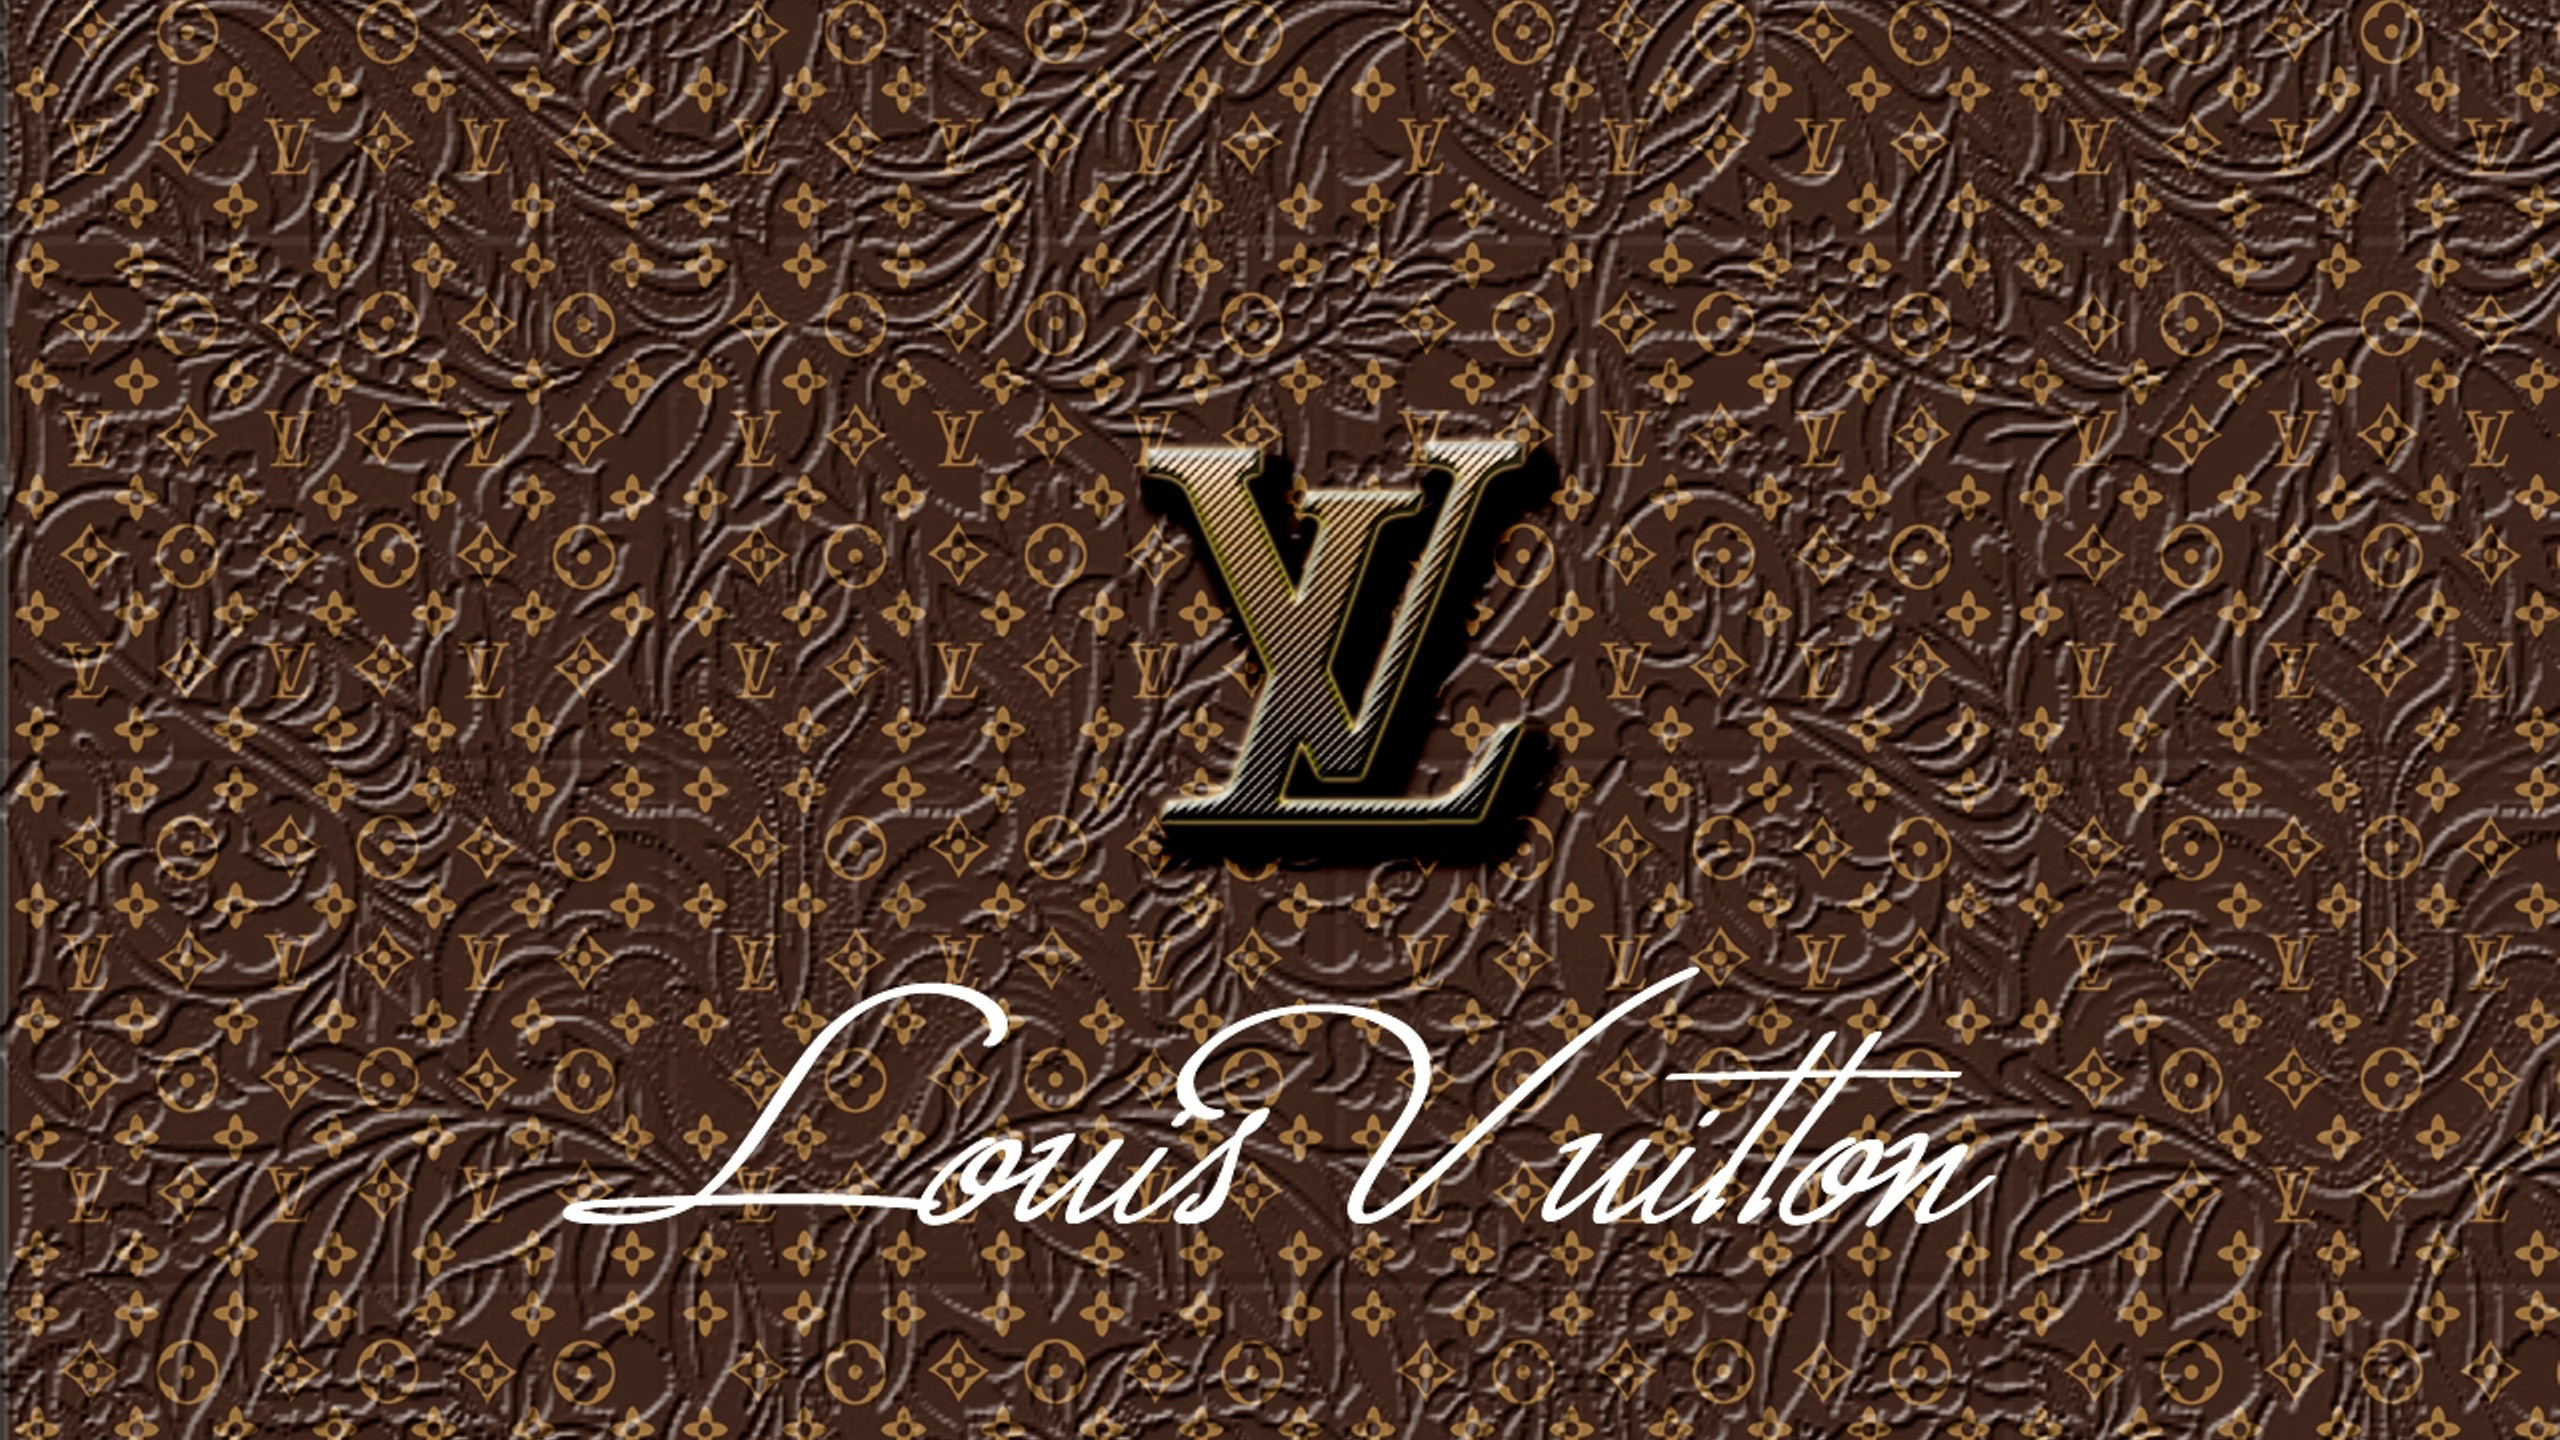 Black and White Louis Vuitton Monogram - Luxurydotcom - iTunes app